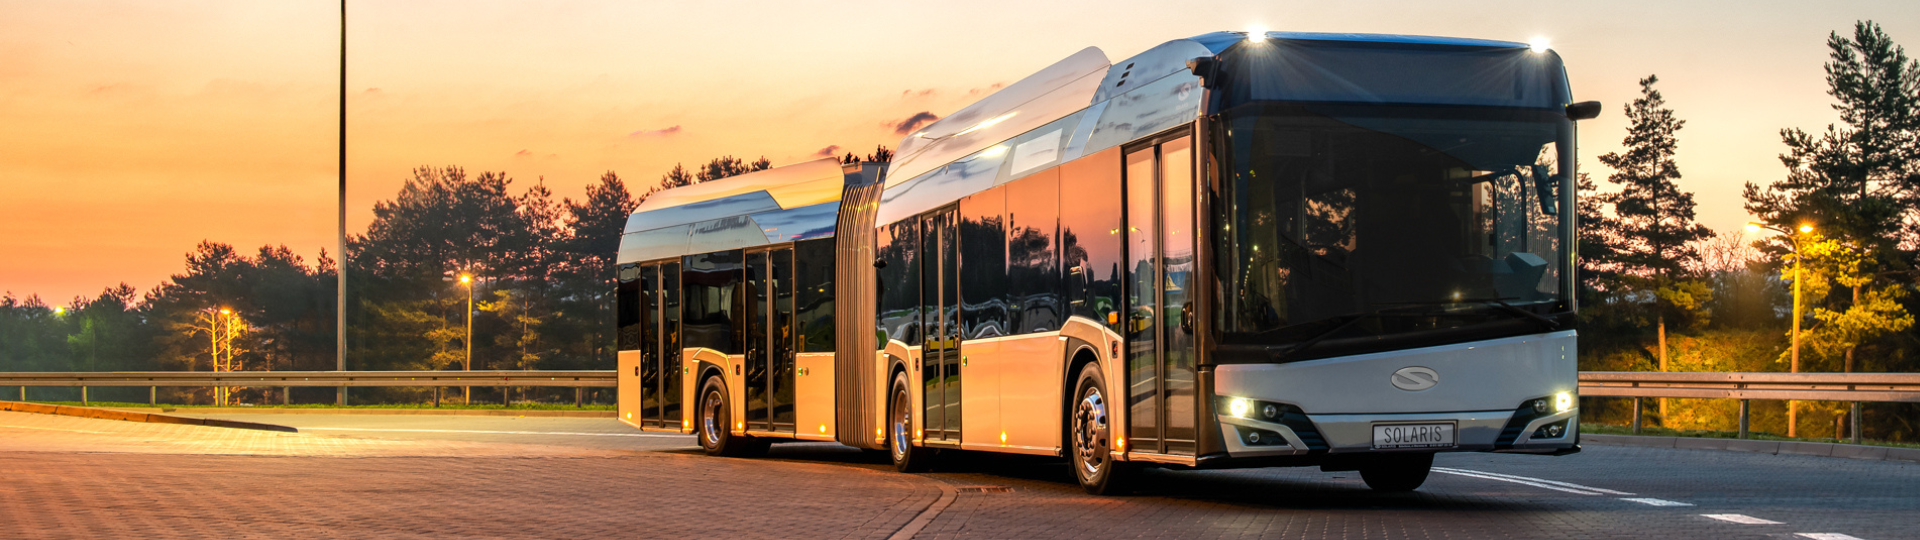 Solaris e-buses to debut in Łódź soon